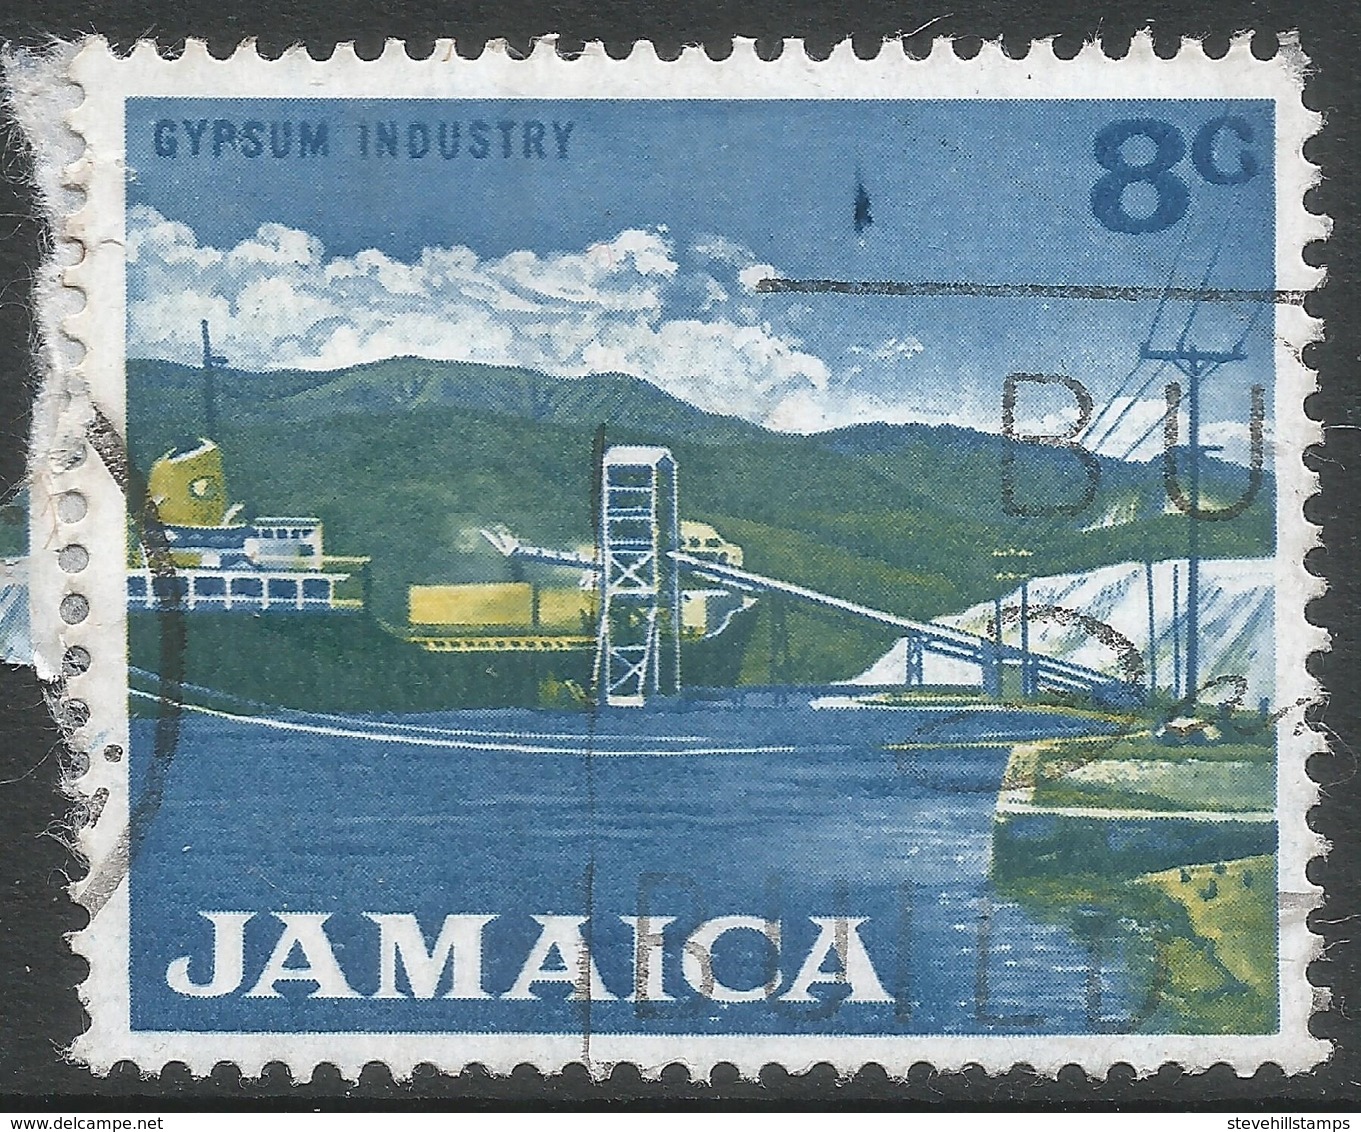 Jamaica. 1970 Definitives. 8c Used. SG 312 - Jamaica (1962-...)